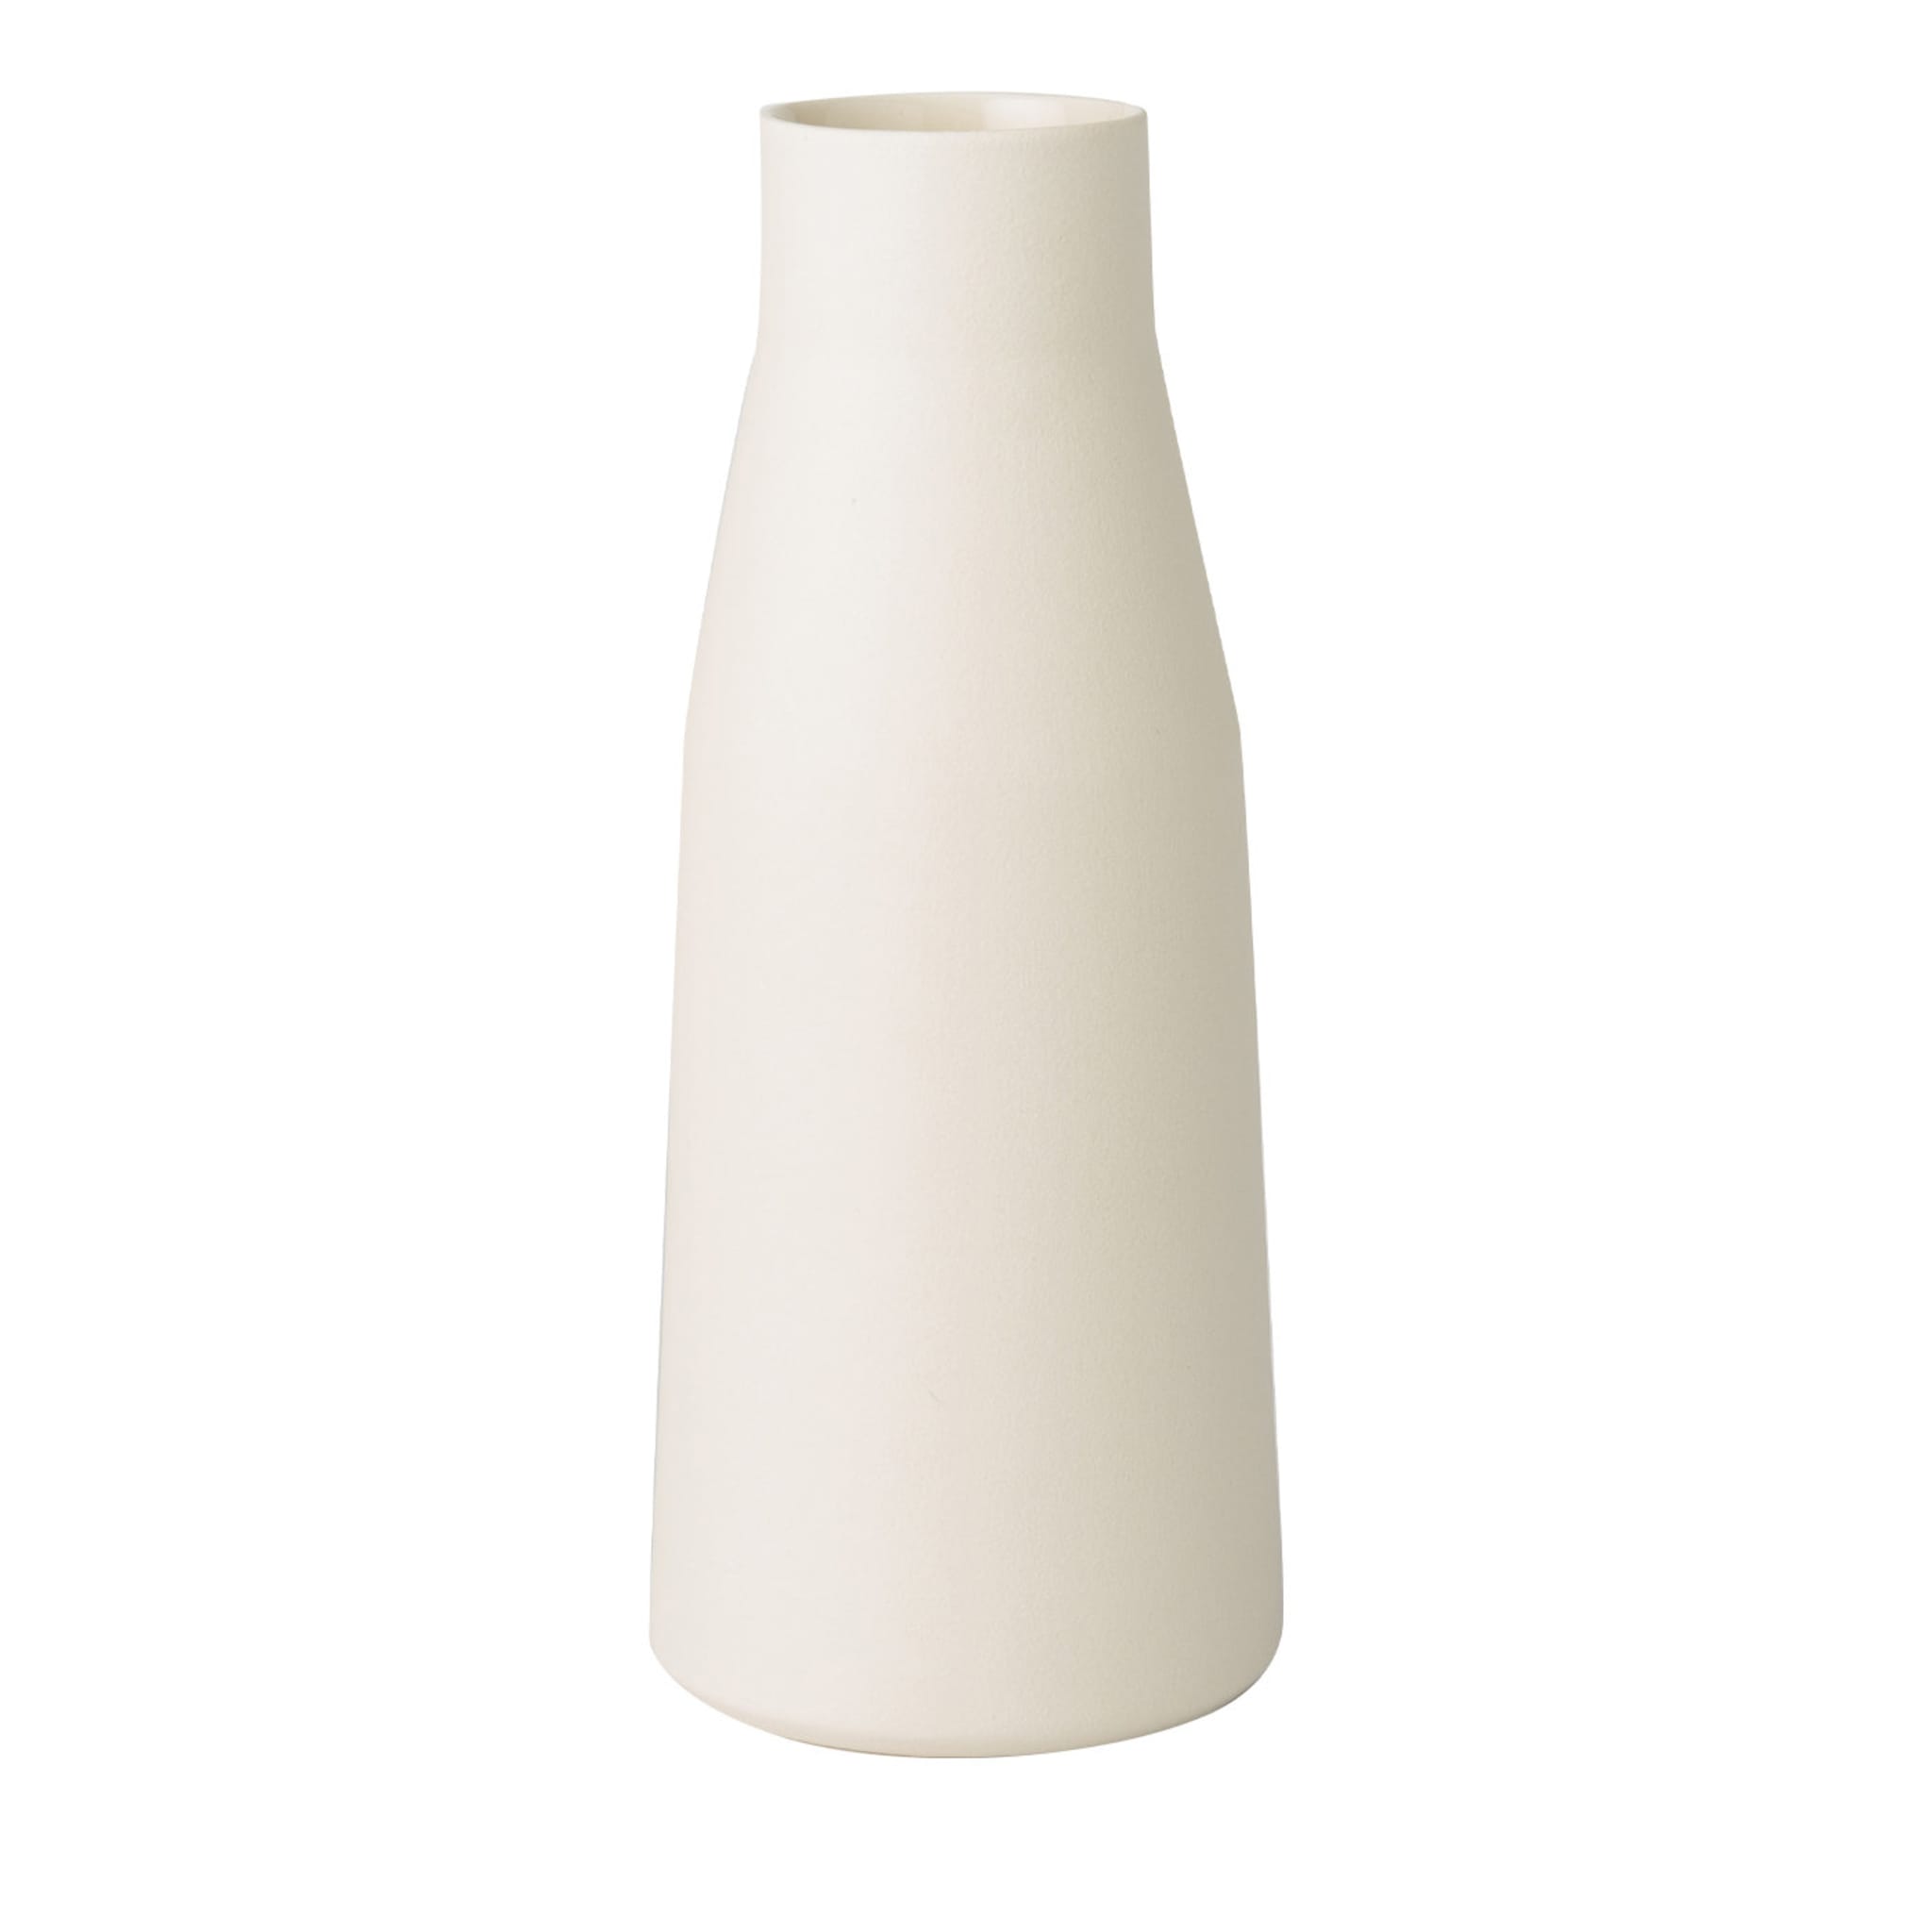 White Ceramic Vase or Carafe - Main view